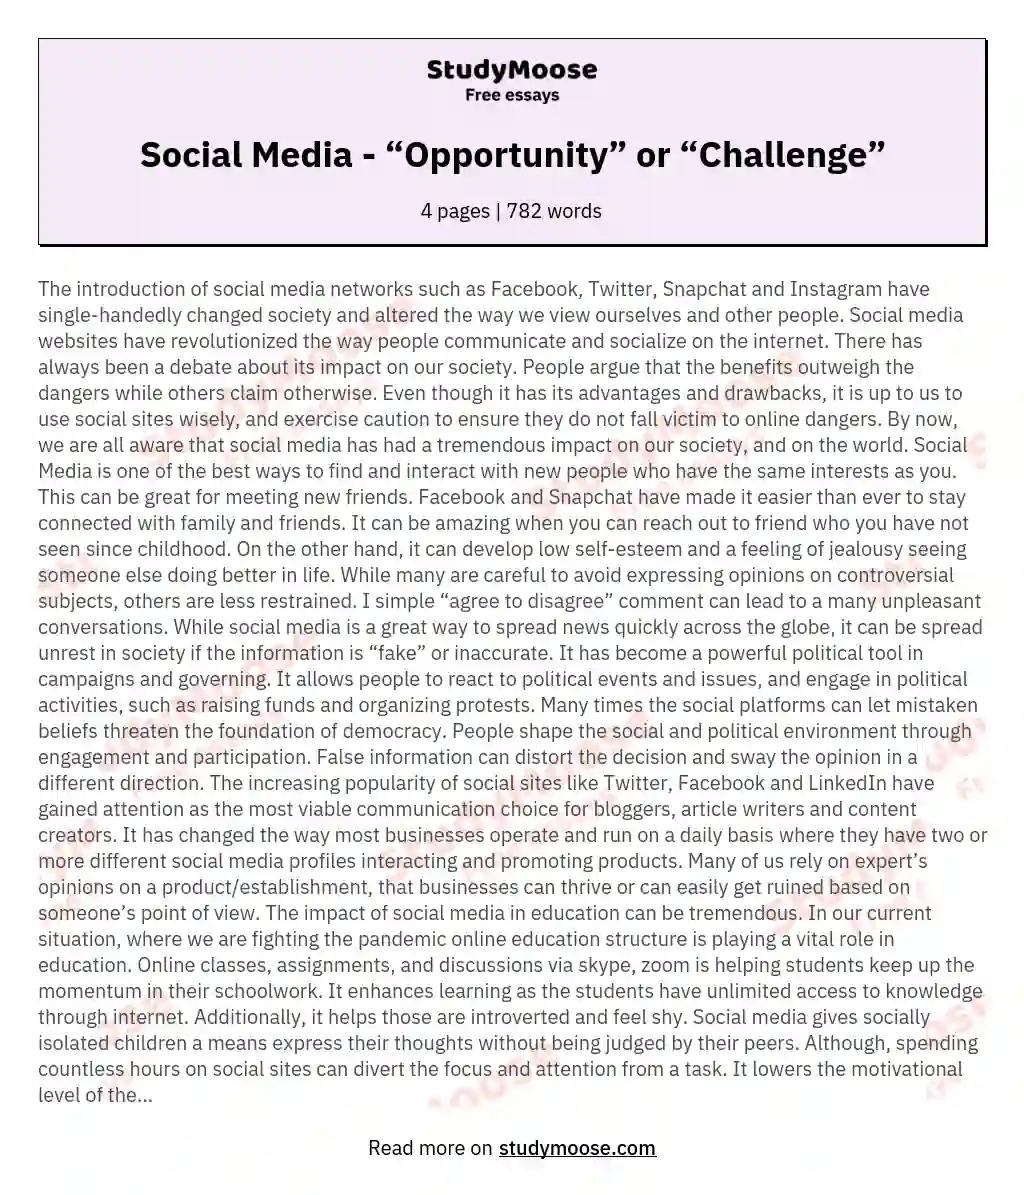 Social Media - “Opportunity” or “Challenge” essay